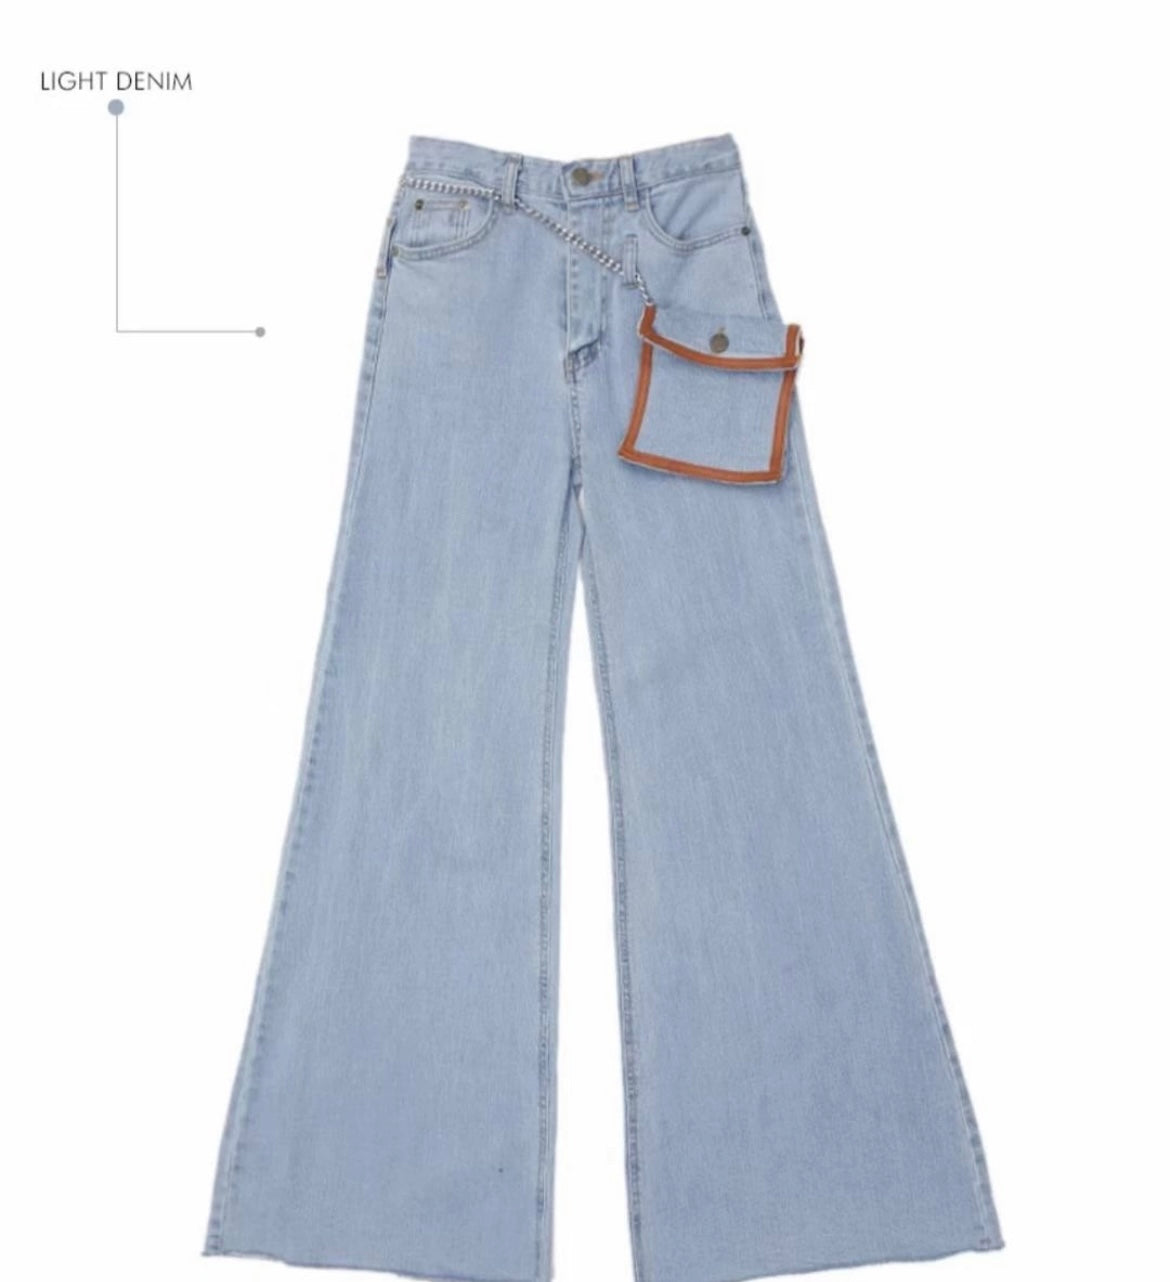 Long Flared Jeans Giant Pocket